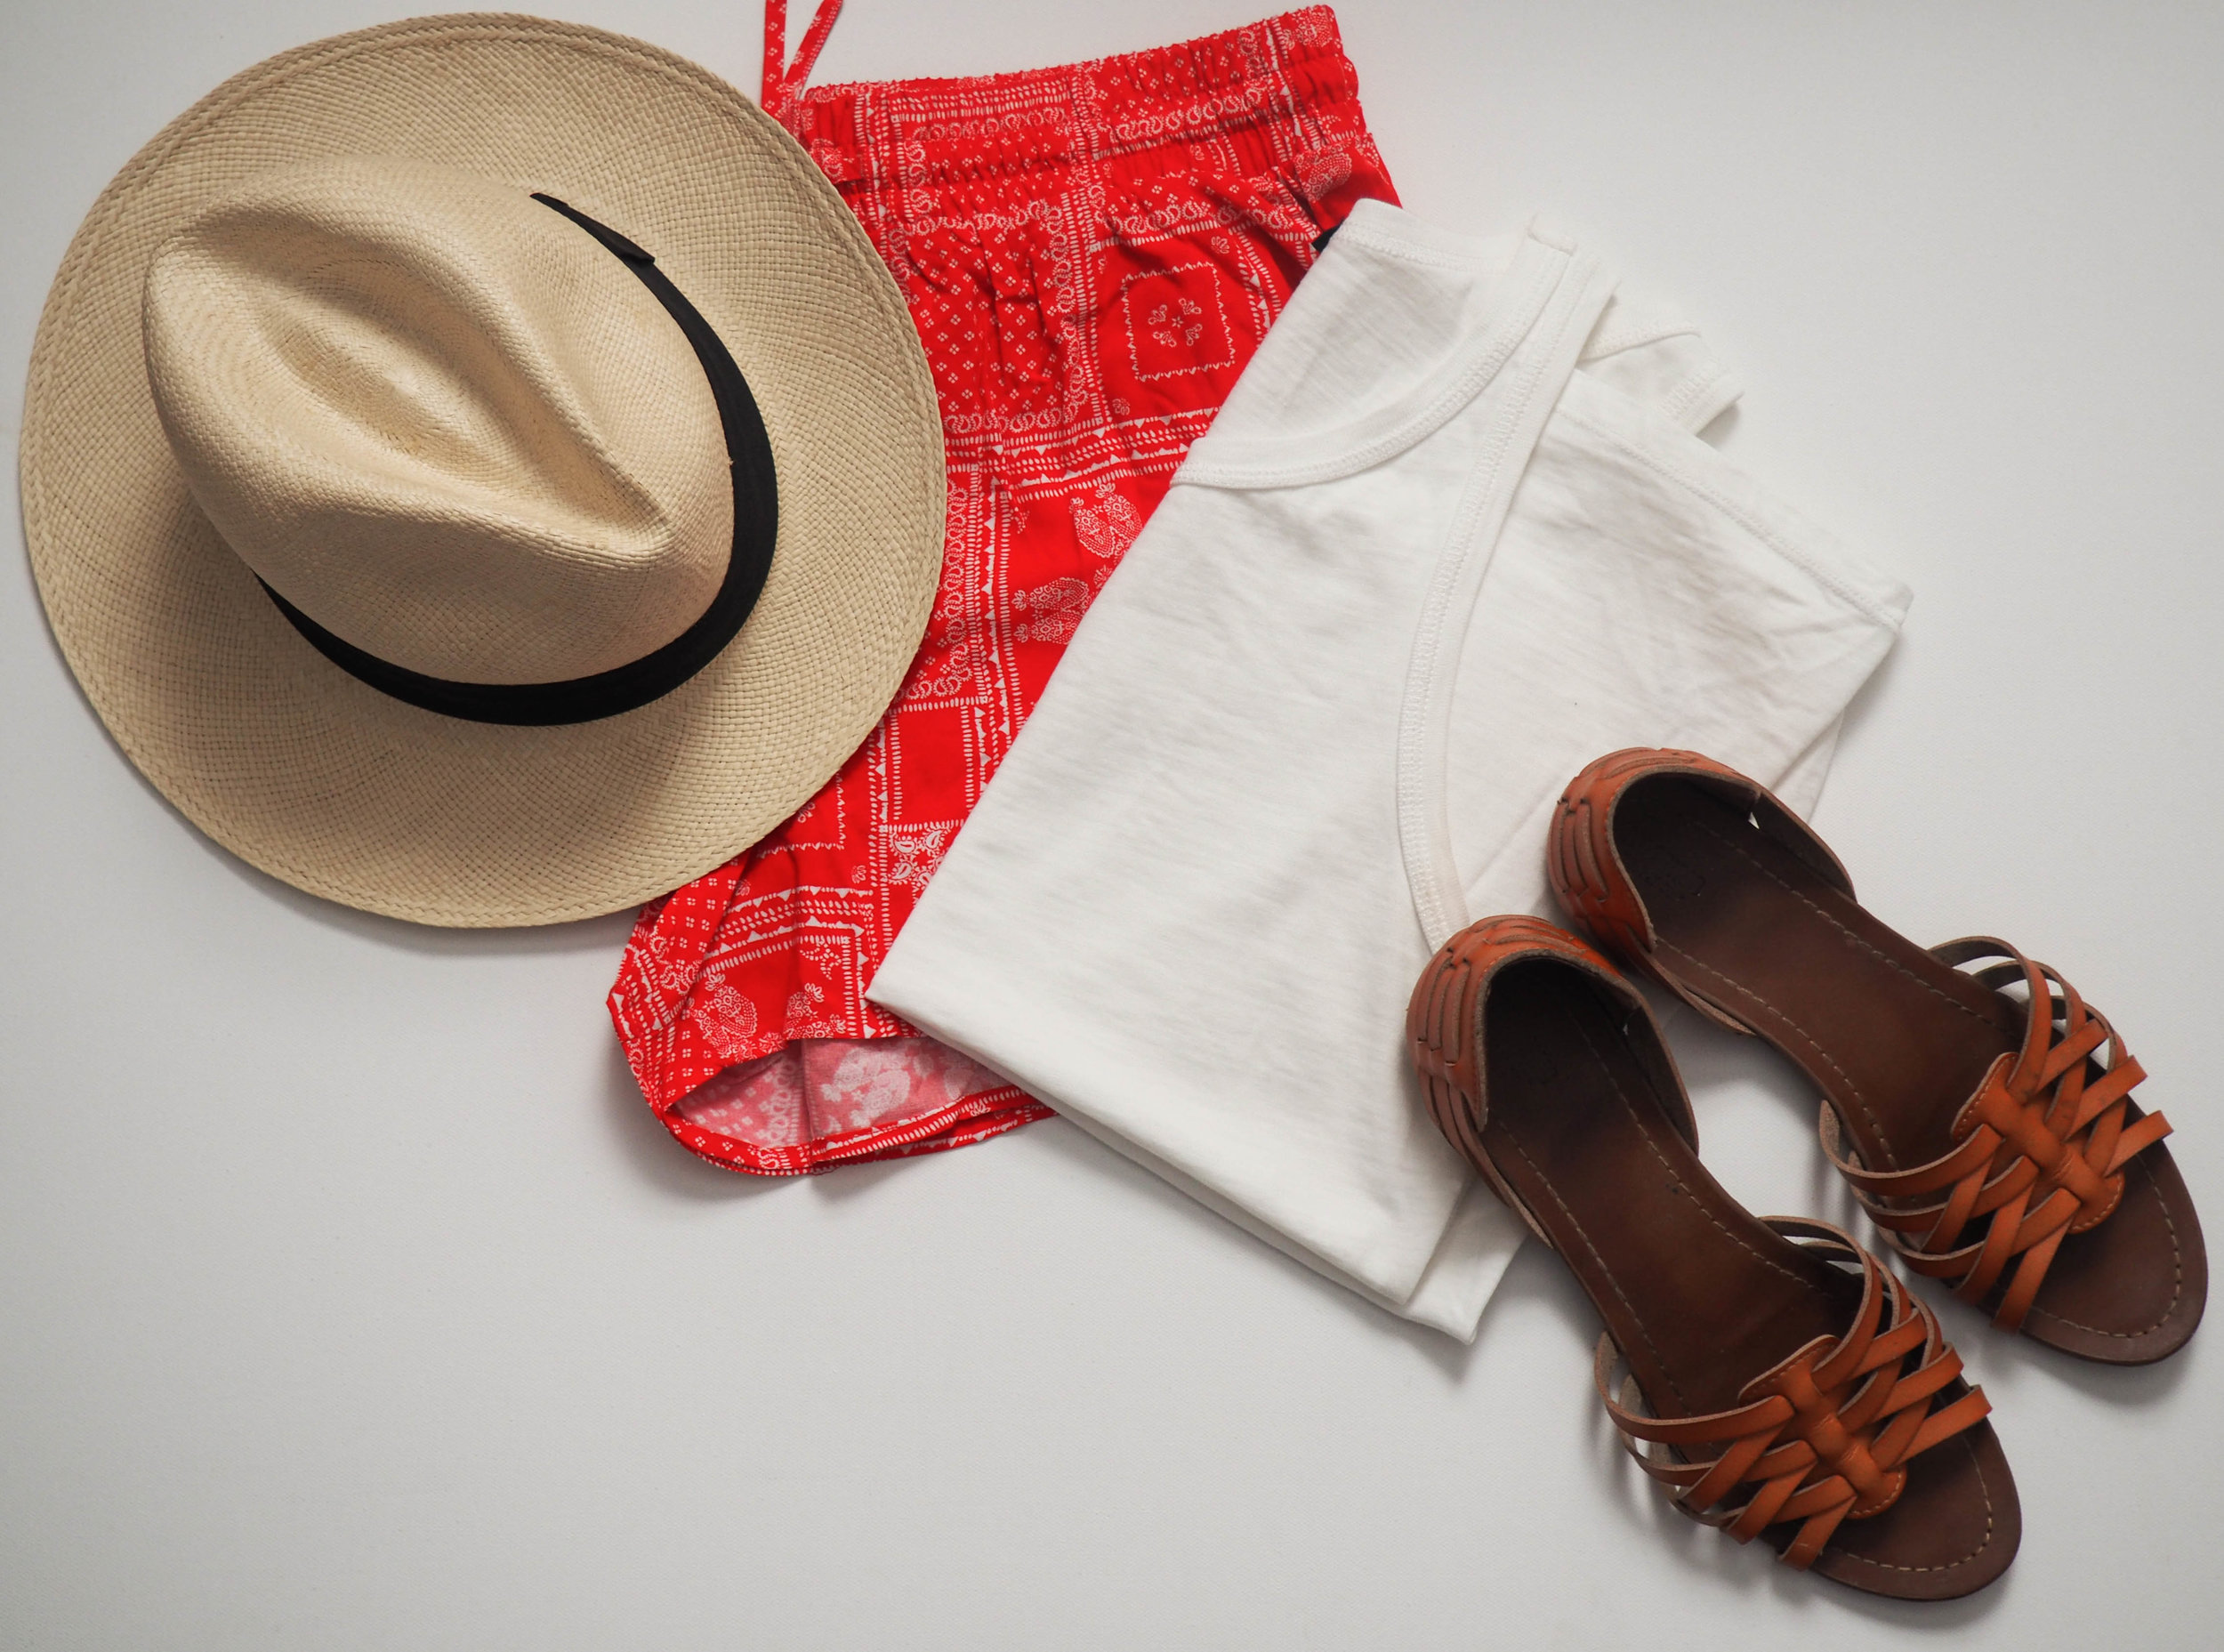   J. Crew Panama Hat   |  Target Soft Shorts  |  Target Gena Flats  